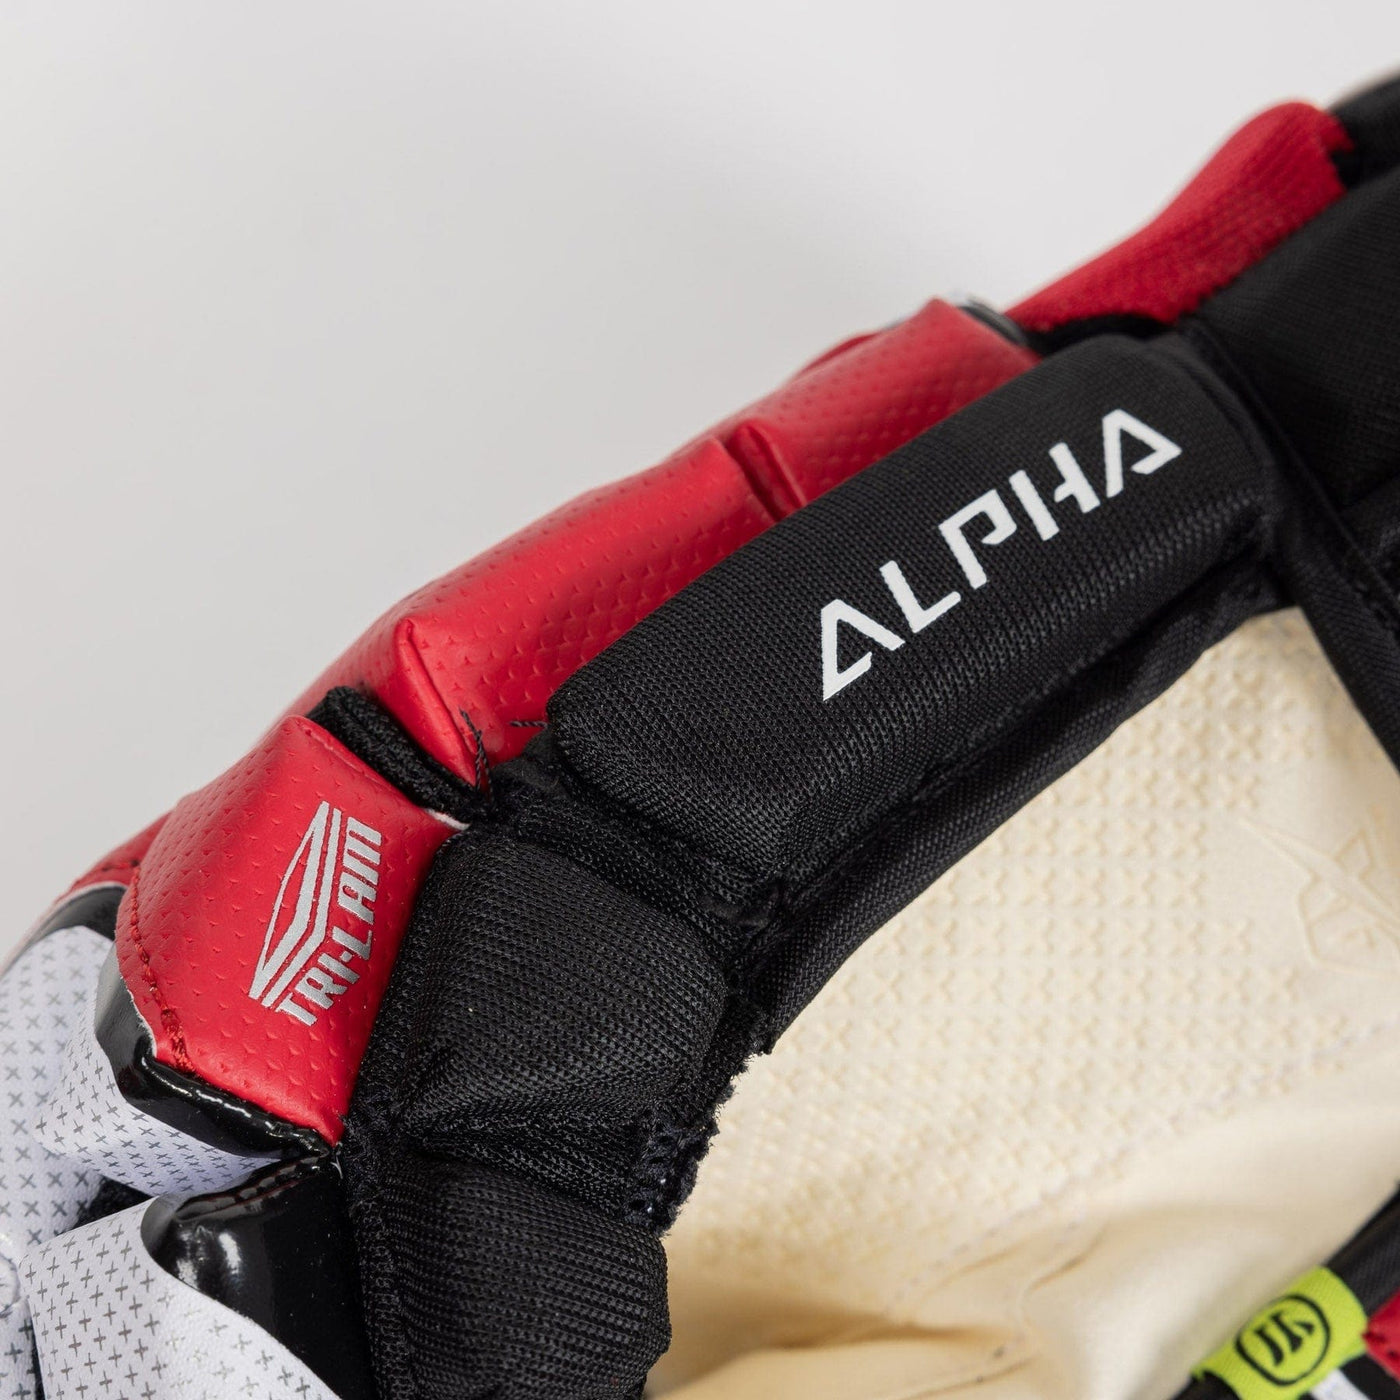 Warrior Alpha LX2 Pro Junior Hockey Glove - The Hockey Shop Source For Sports